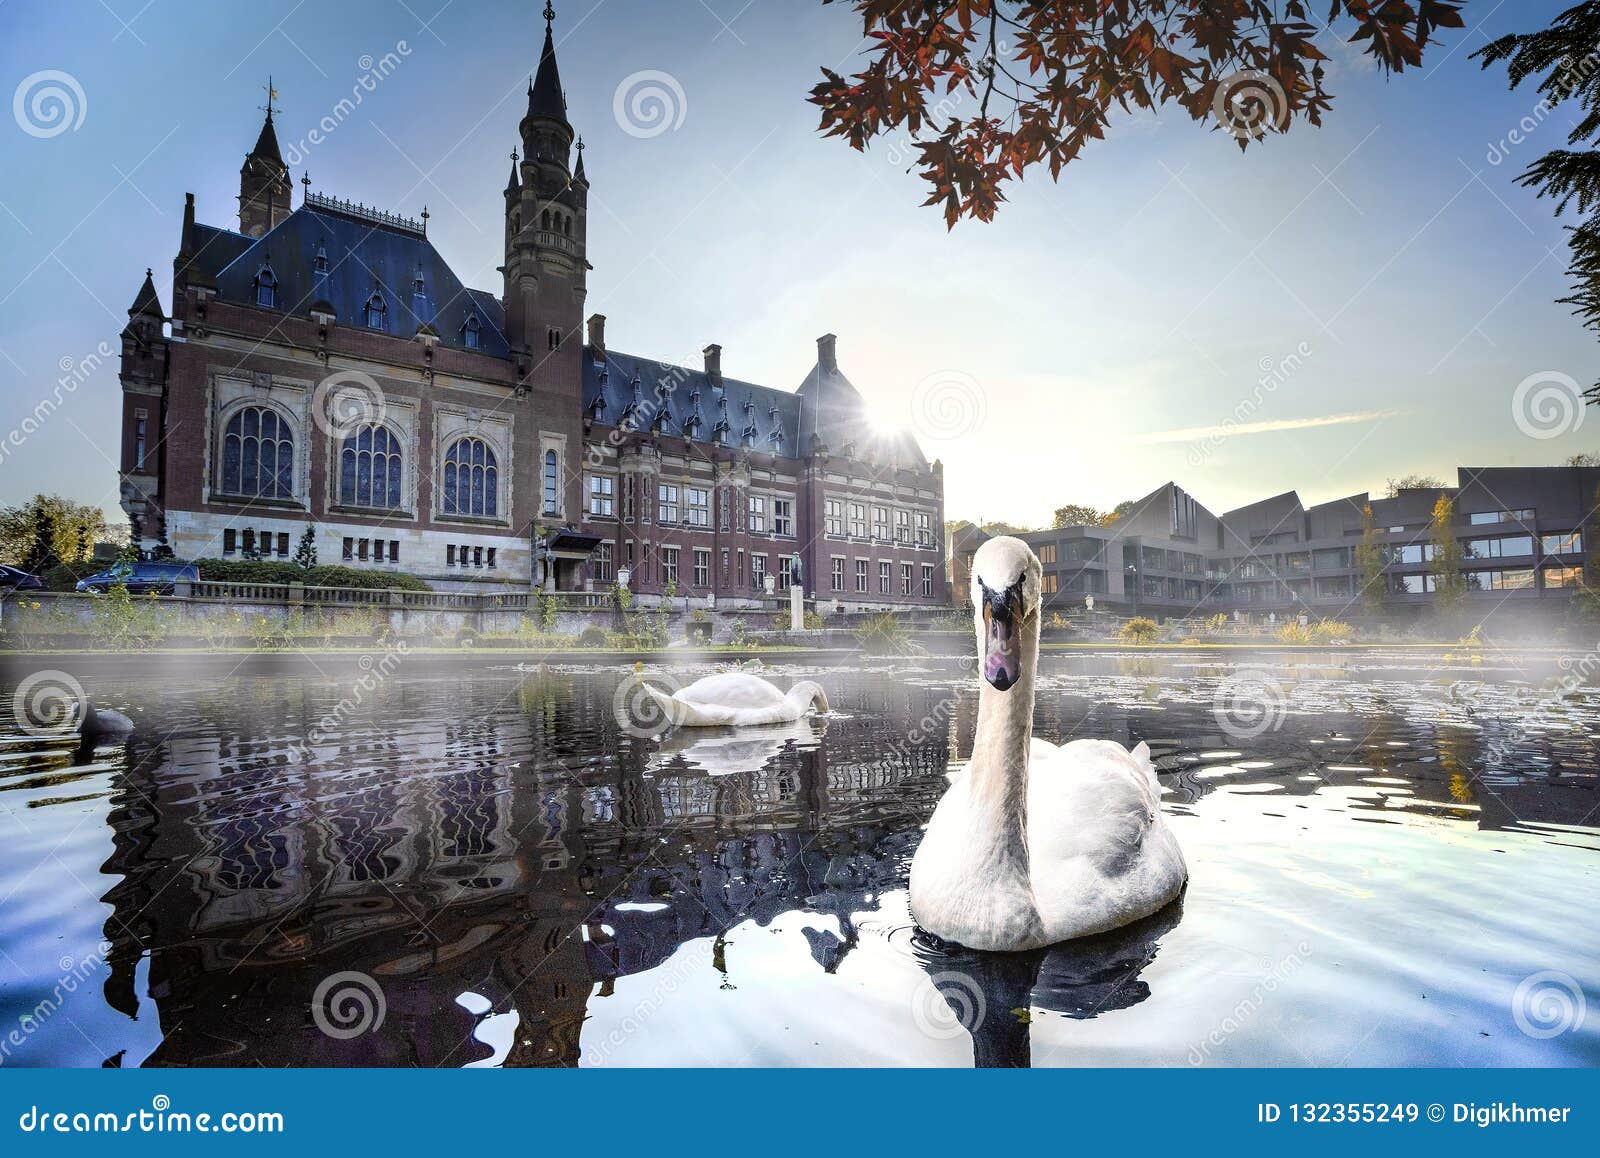 swan swimming in autumn mist